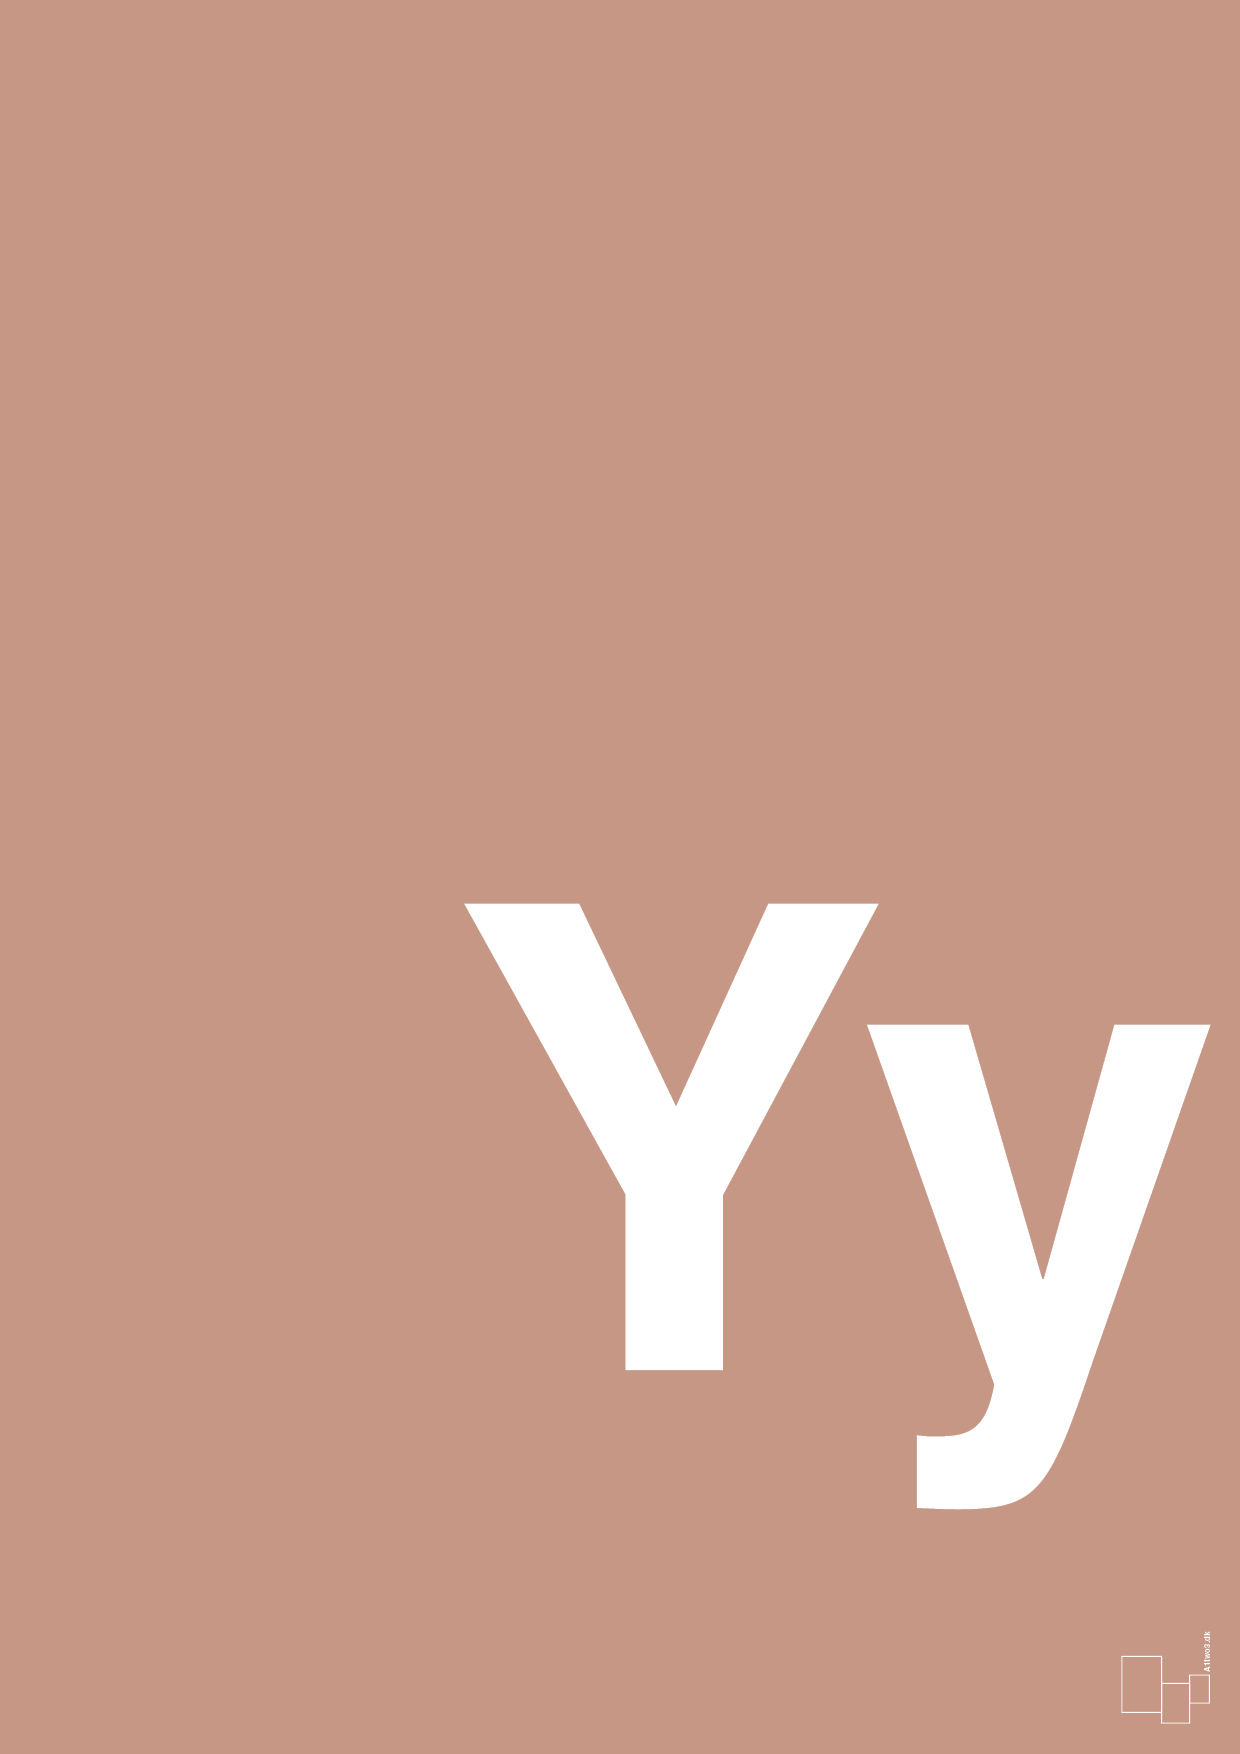 bogstav yy - Plakat med Bogstaver i Powder